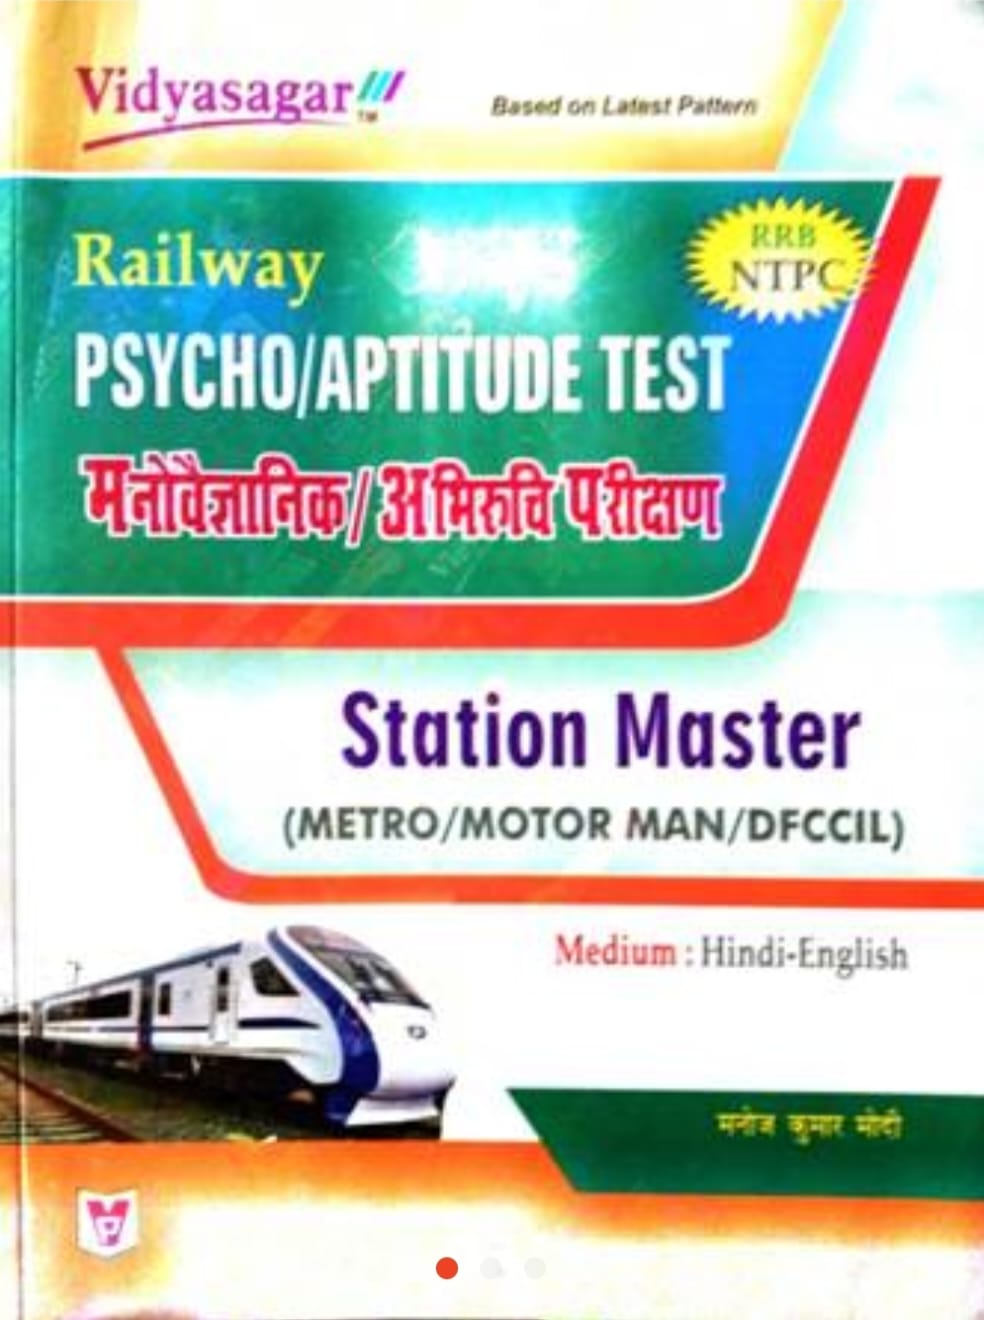 2023-railway-psycho-aptitude-test-book-by-vidyasagar